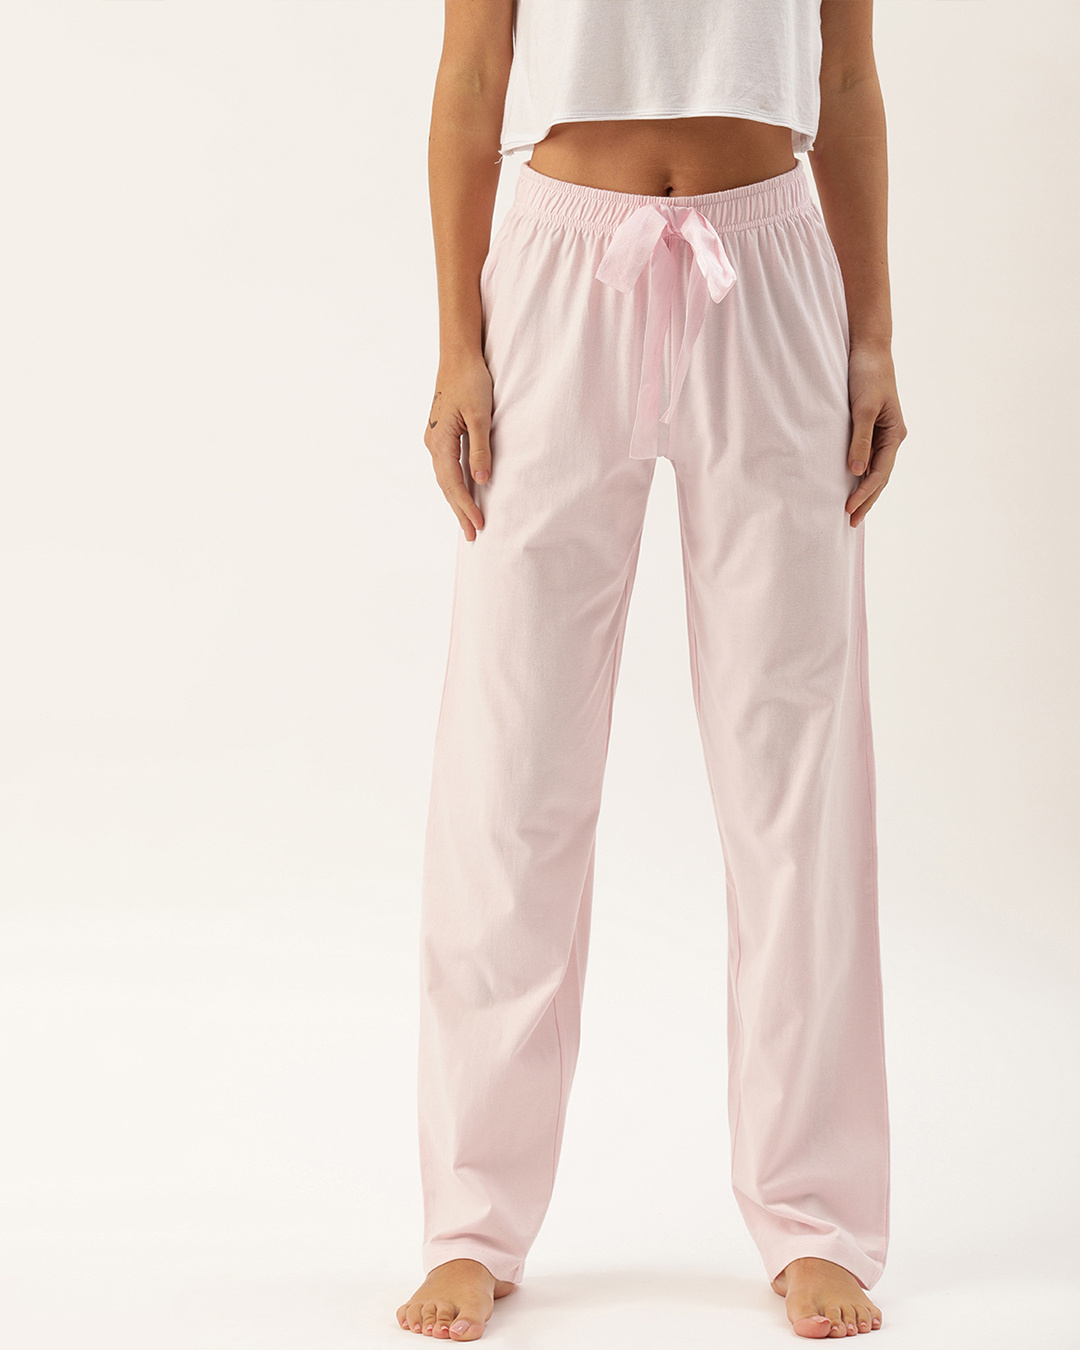 Shop Pack of 2 Lounge Pants - AOP Aqua Green and Solid Pink-Back